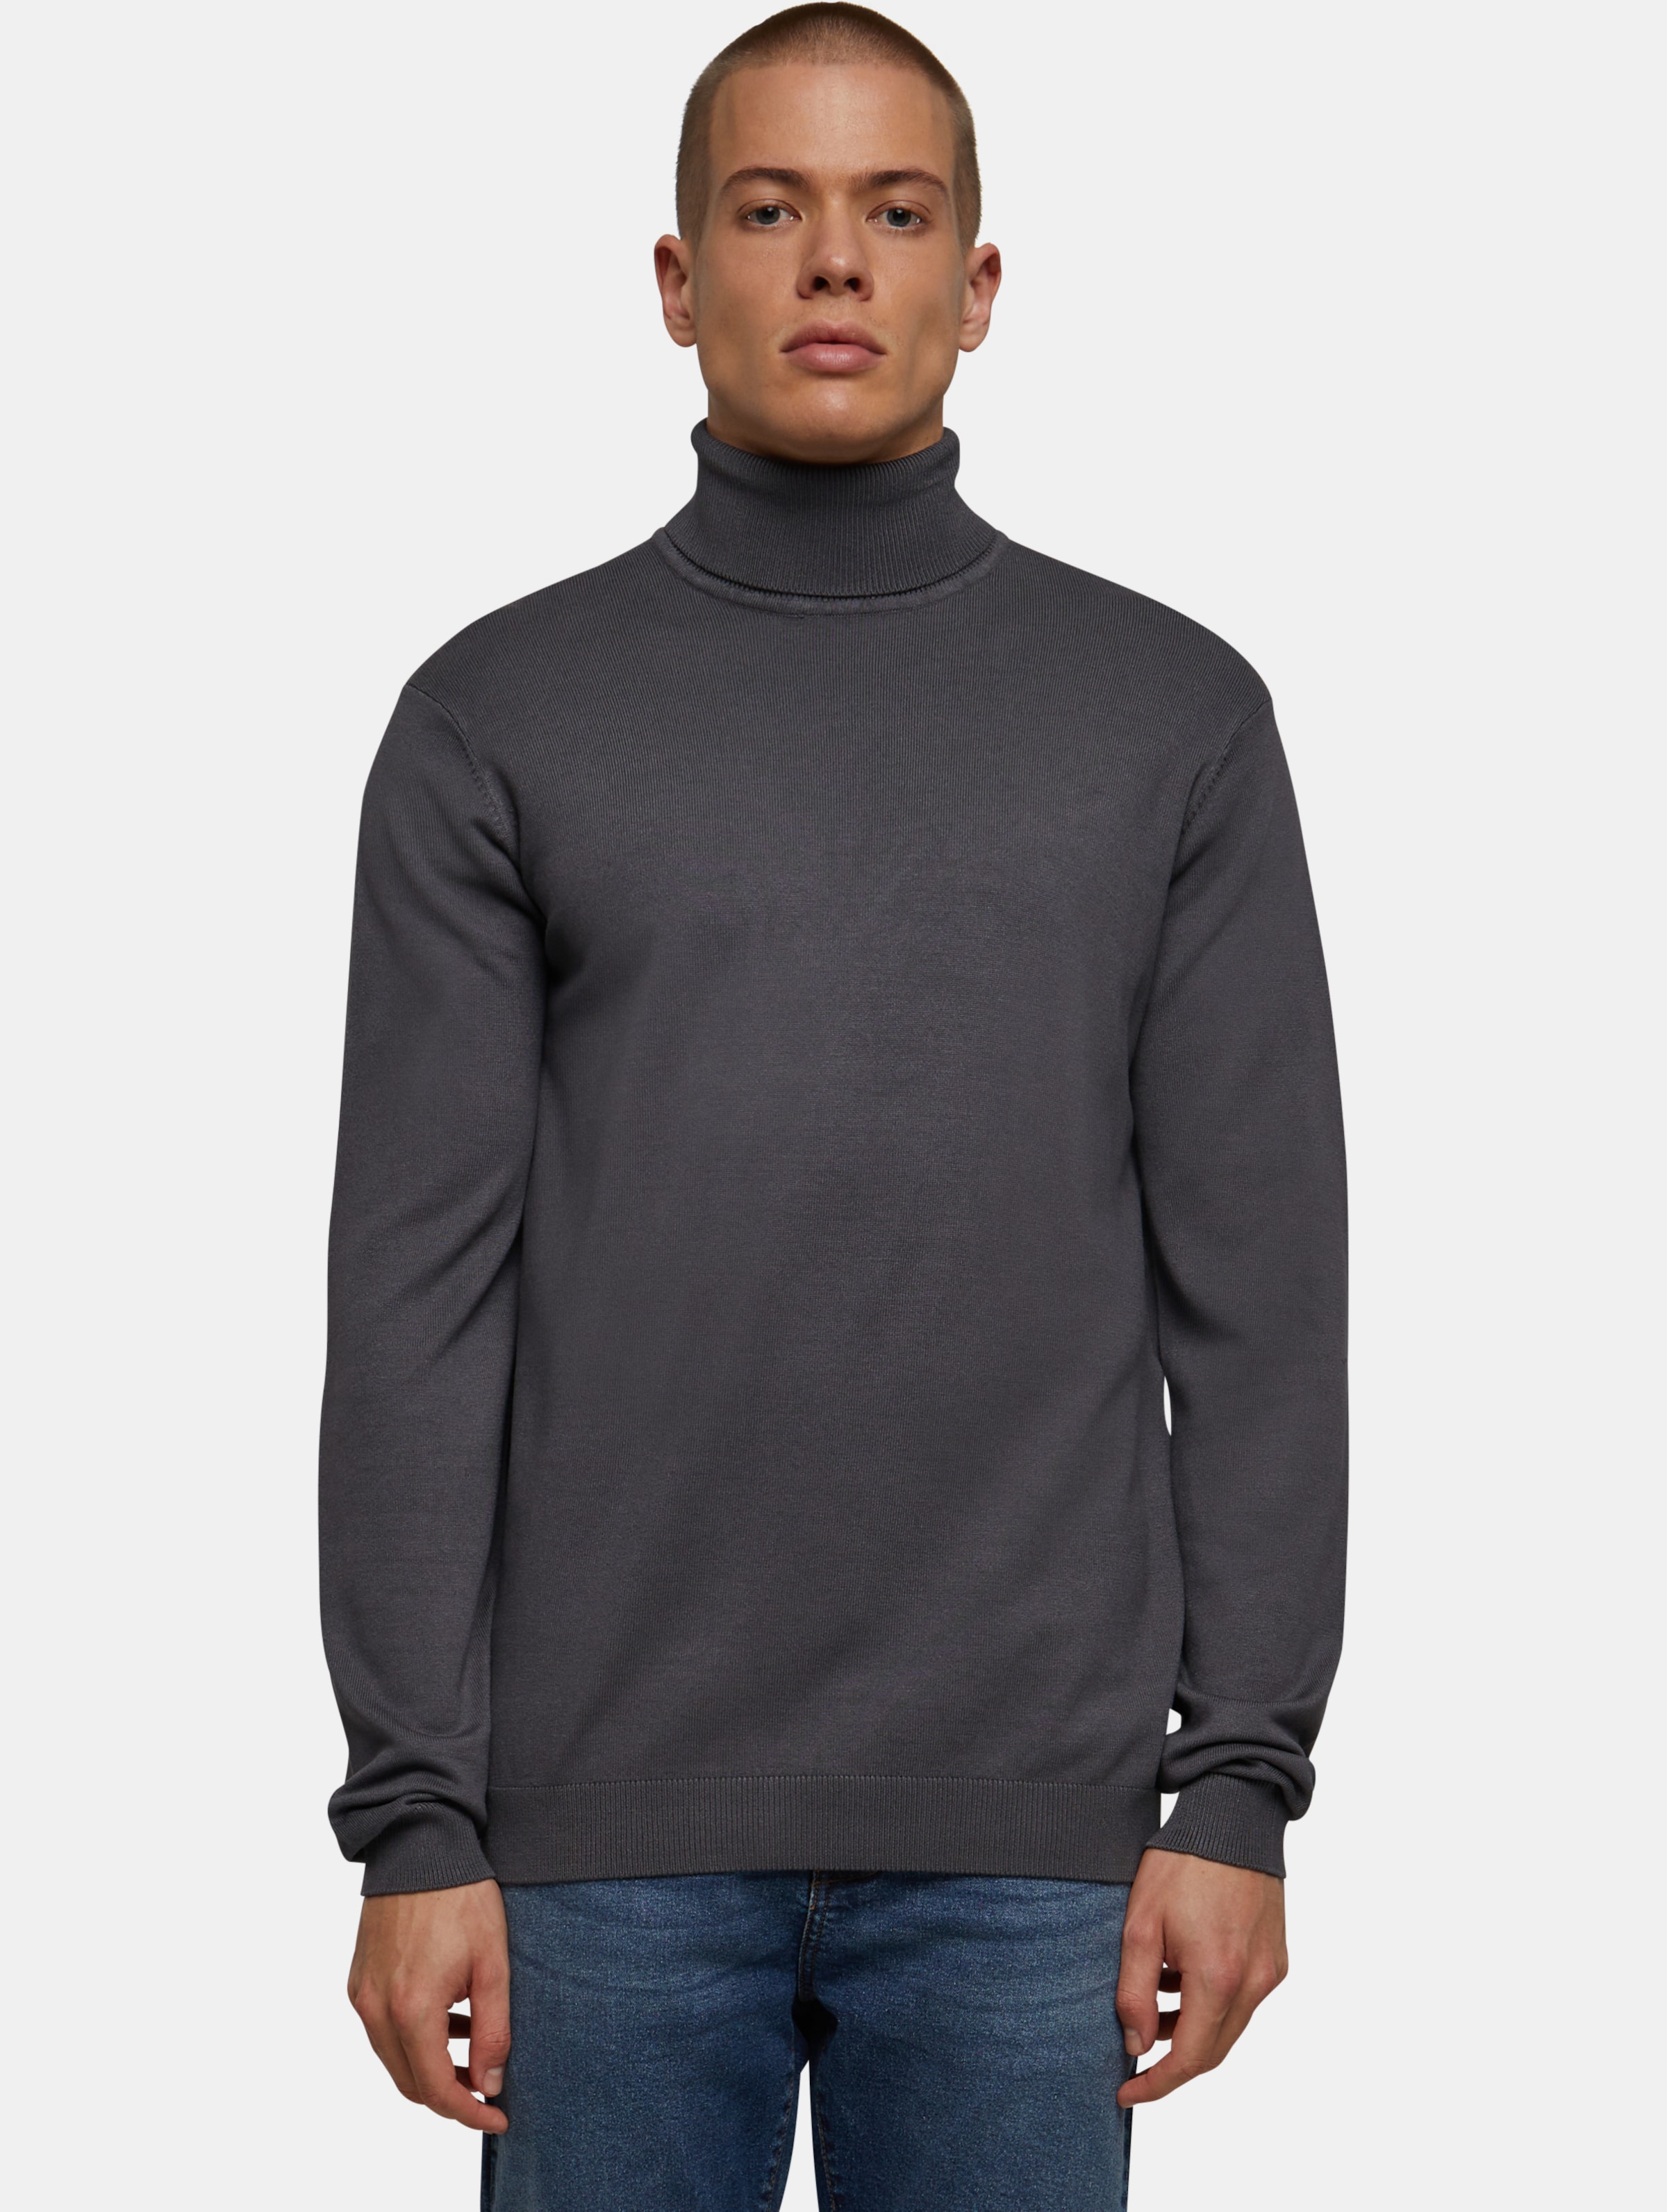 Urban Classics - Knitted Turtleneck Sweater - S - Grijs